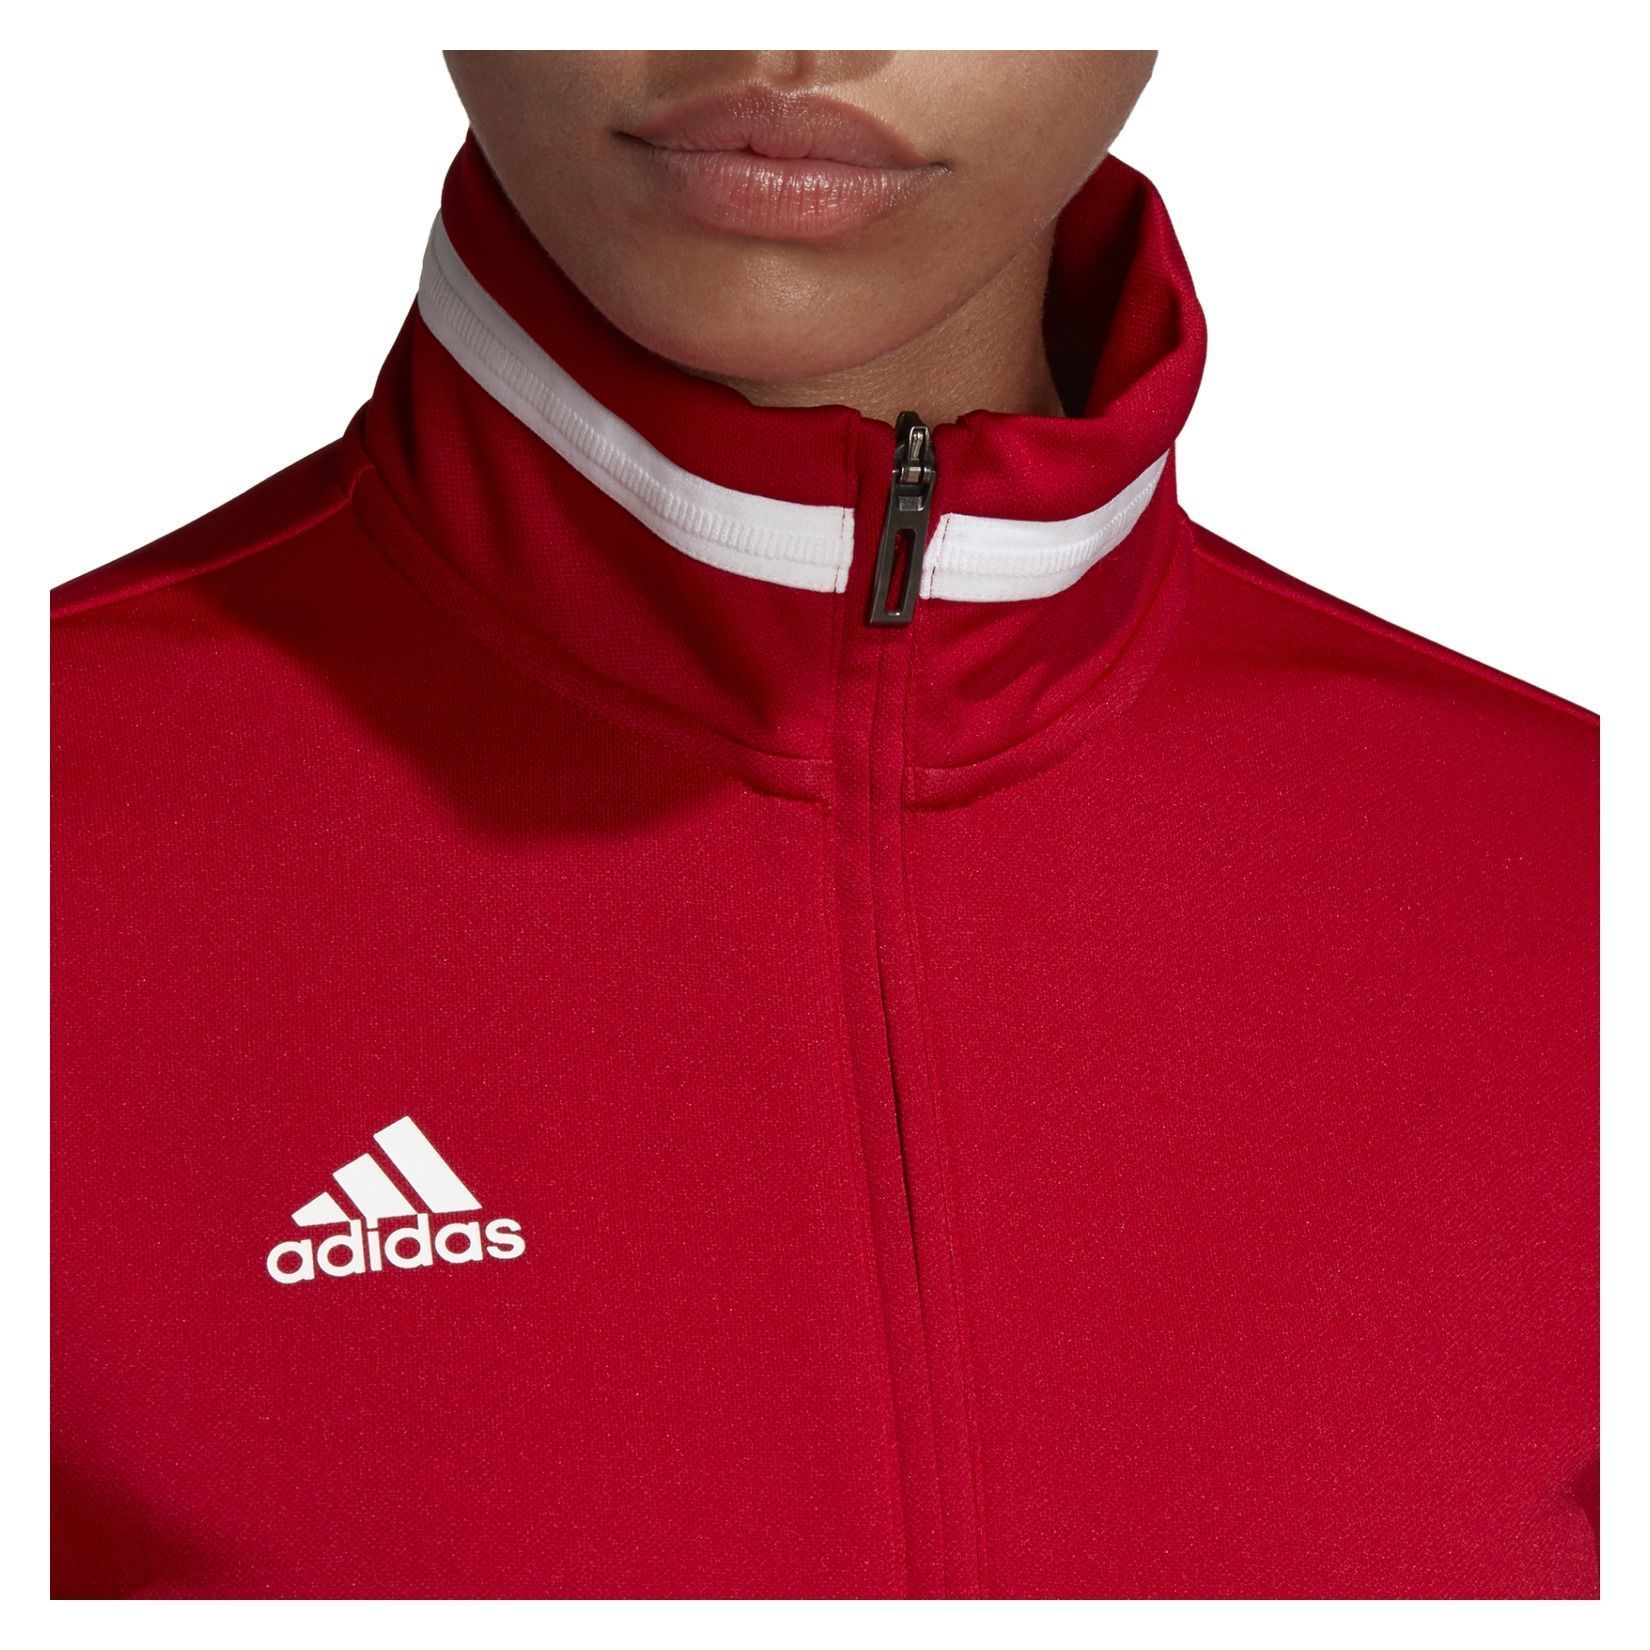 adidas squad jacket womens